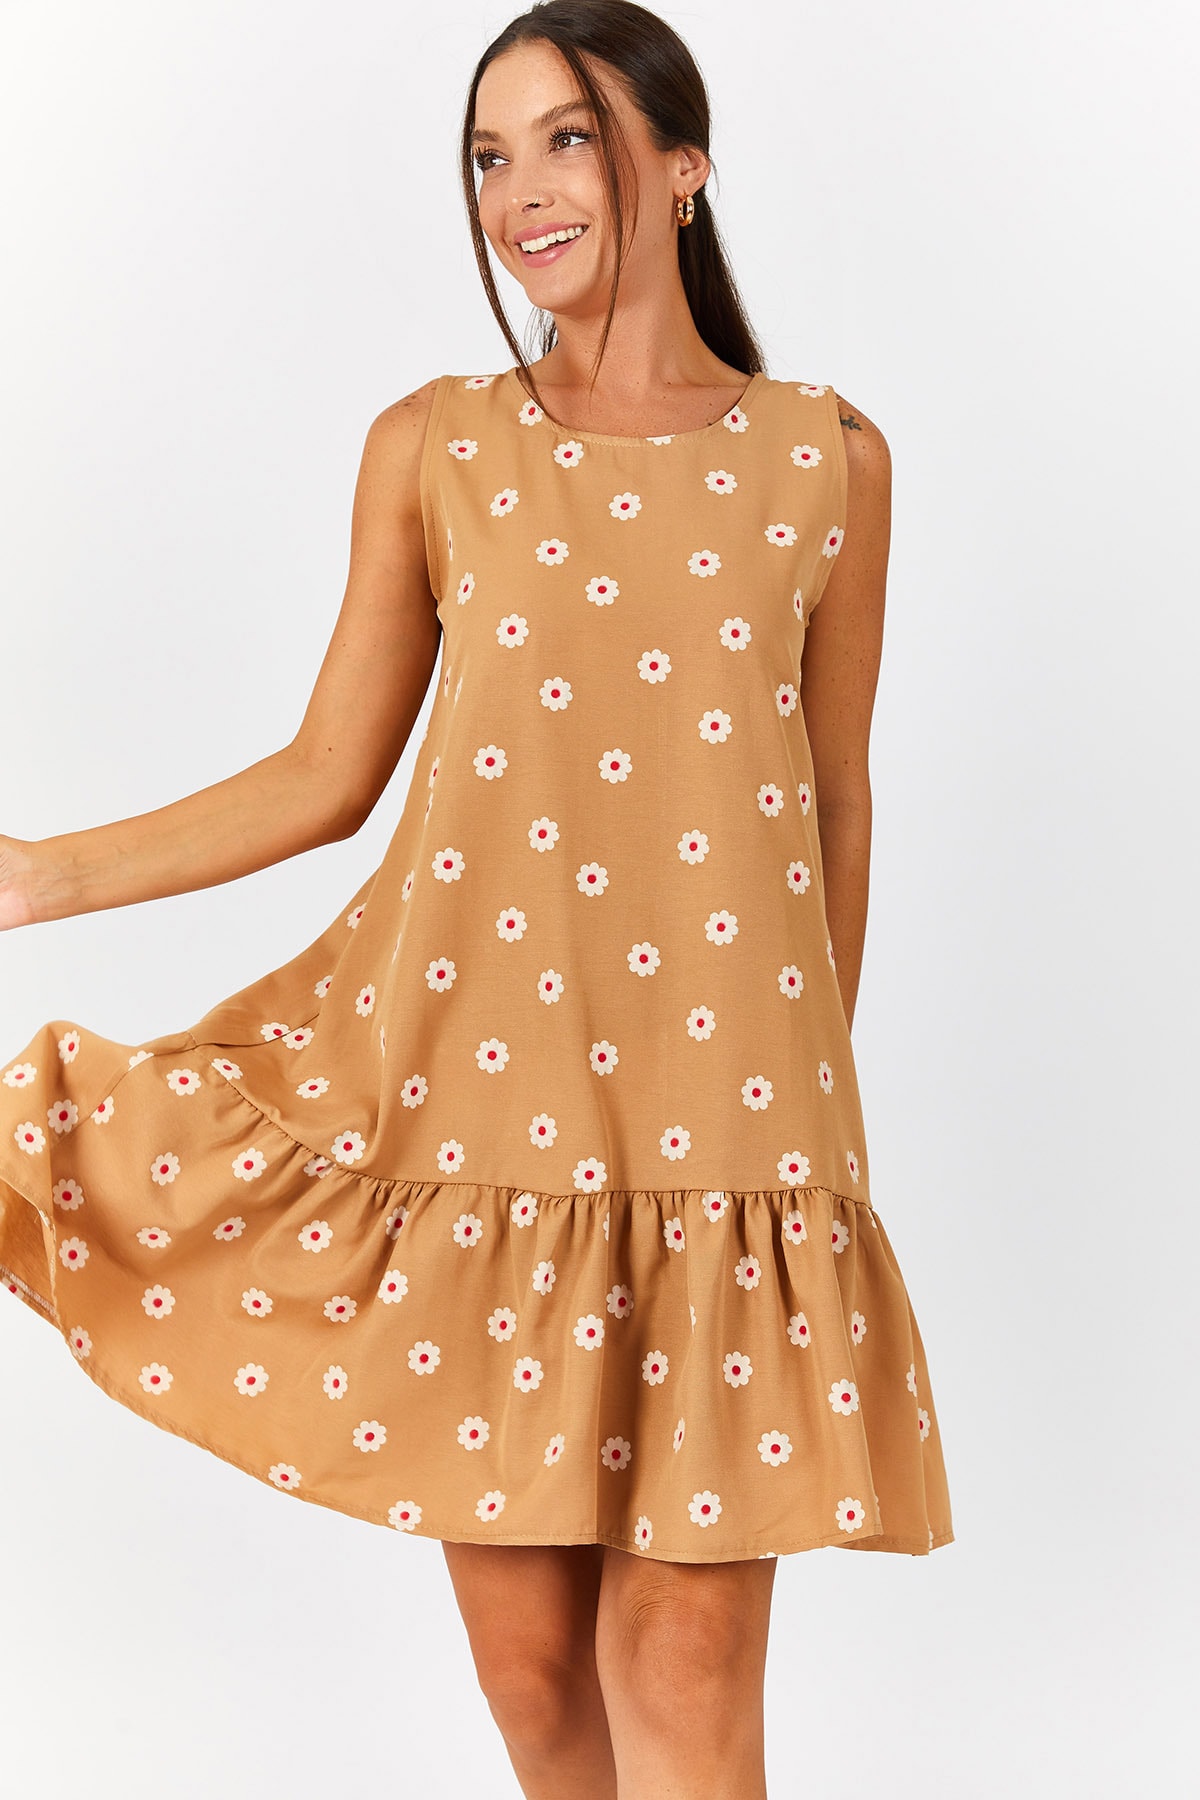 armonika Women's Beige Daisy Pattern Sleeveless Skirt with Frills Dress